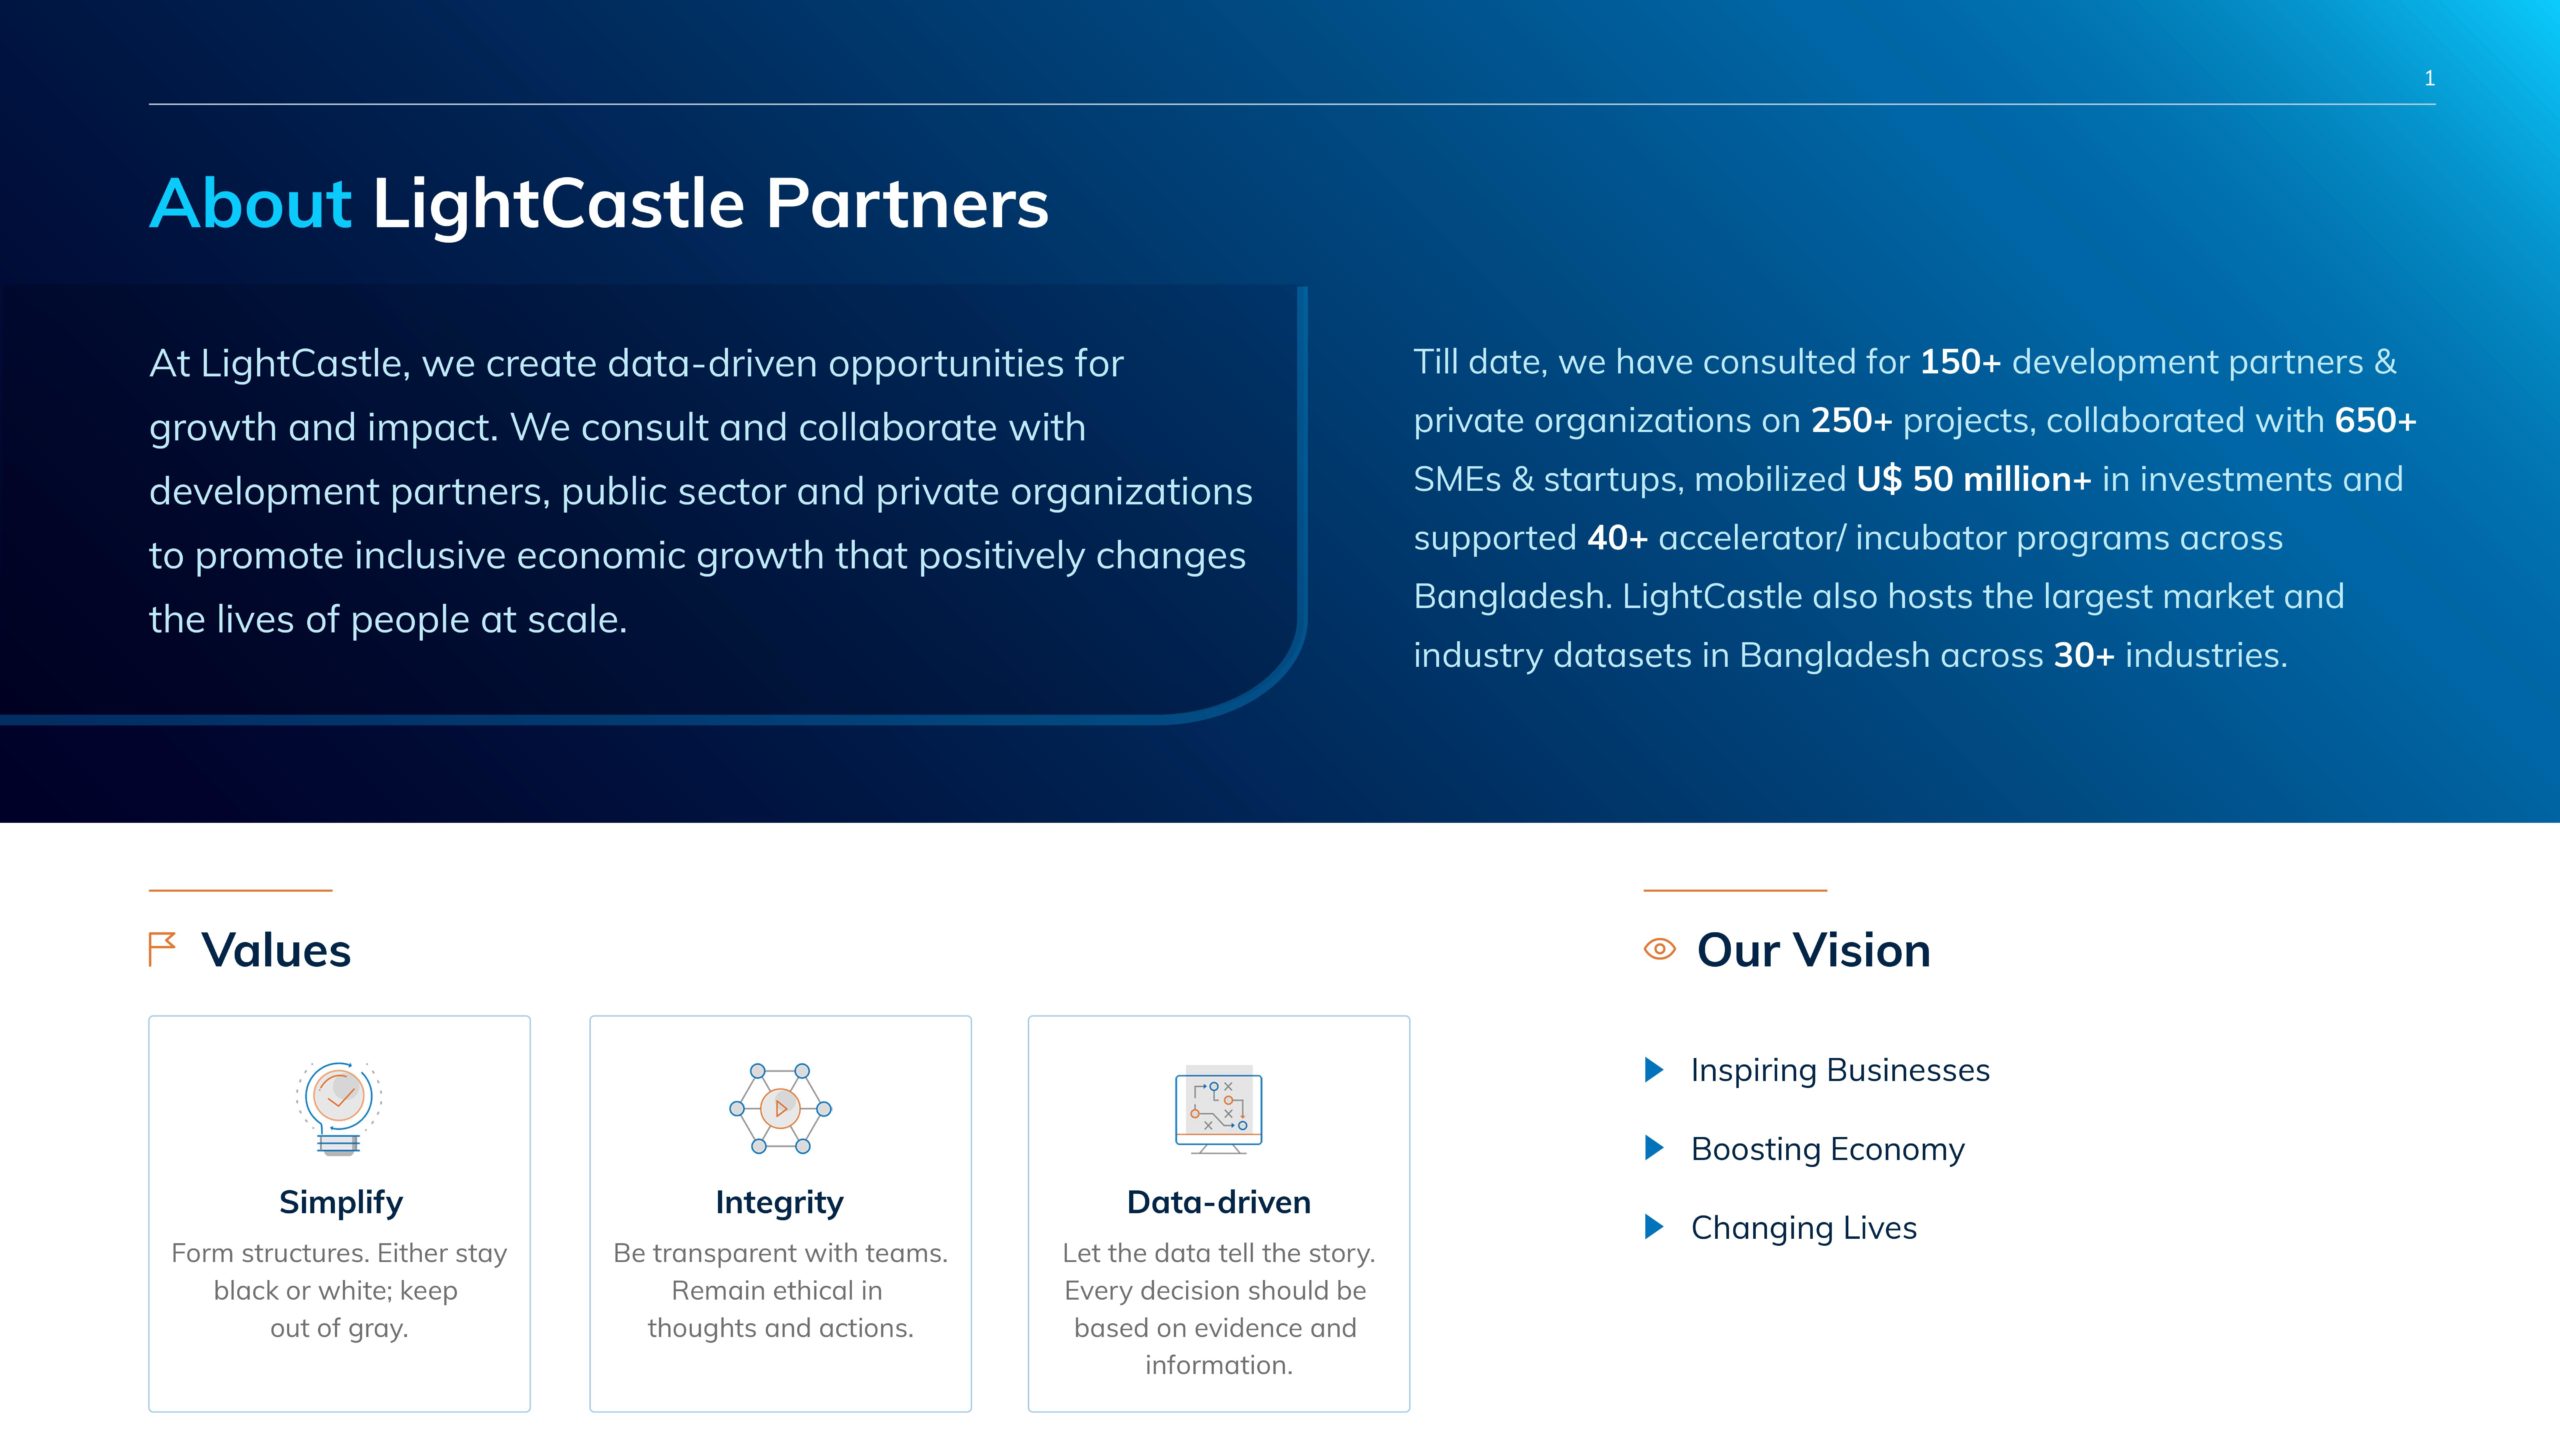 About LightCastle Partners